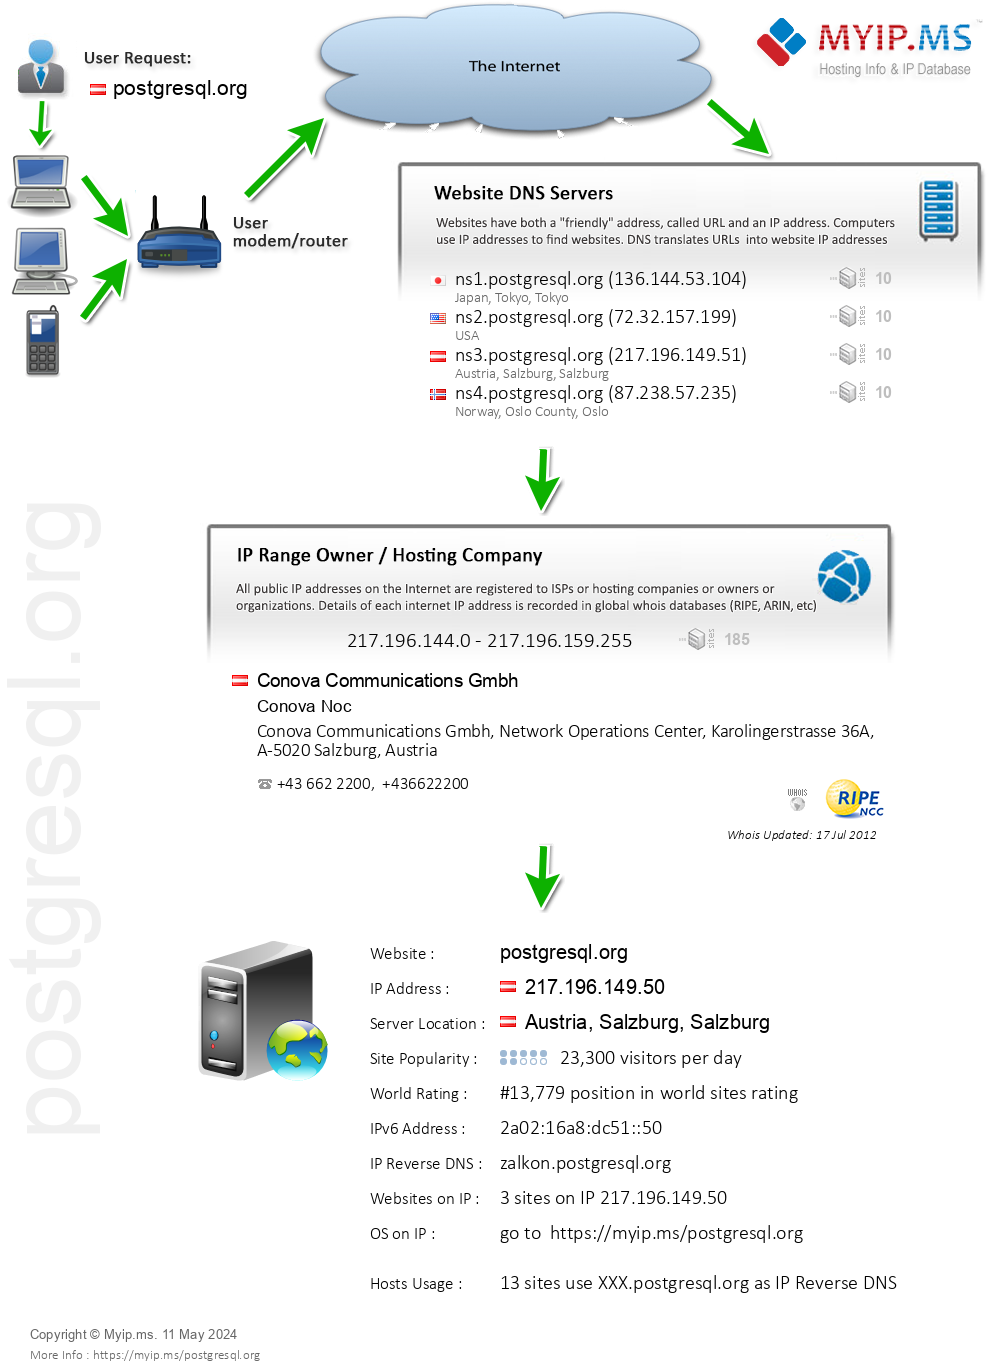 Postgresql.org - Website Hosting Visual IP Diagram